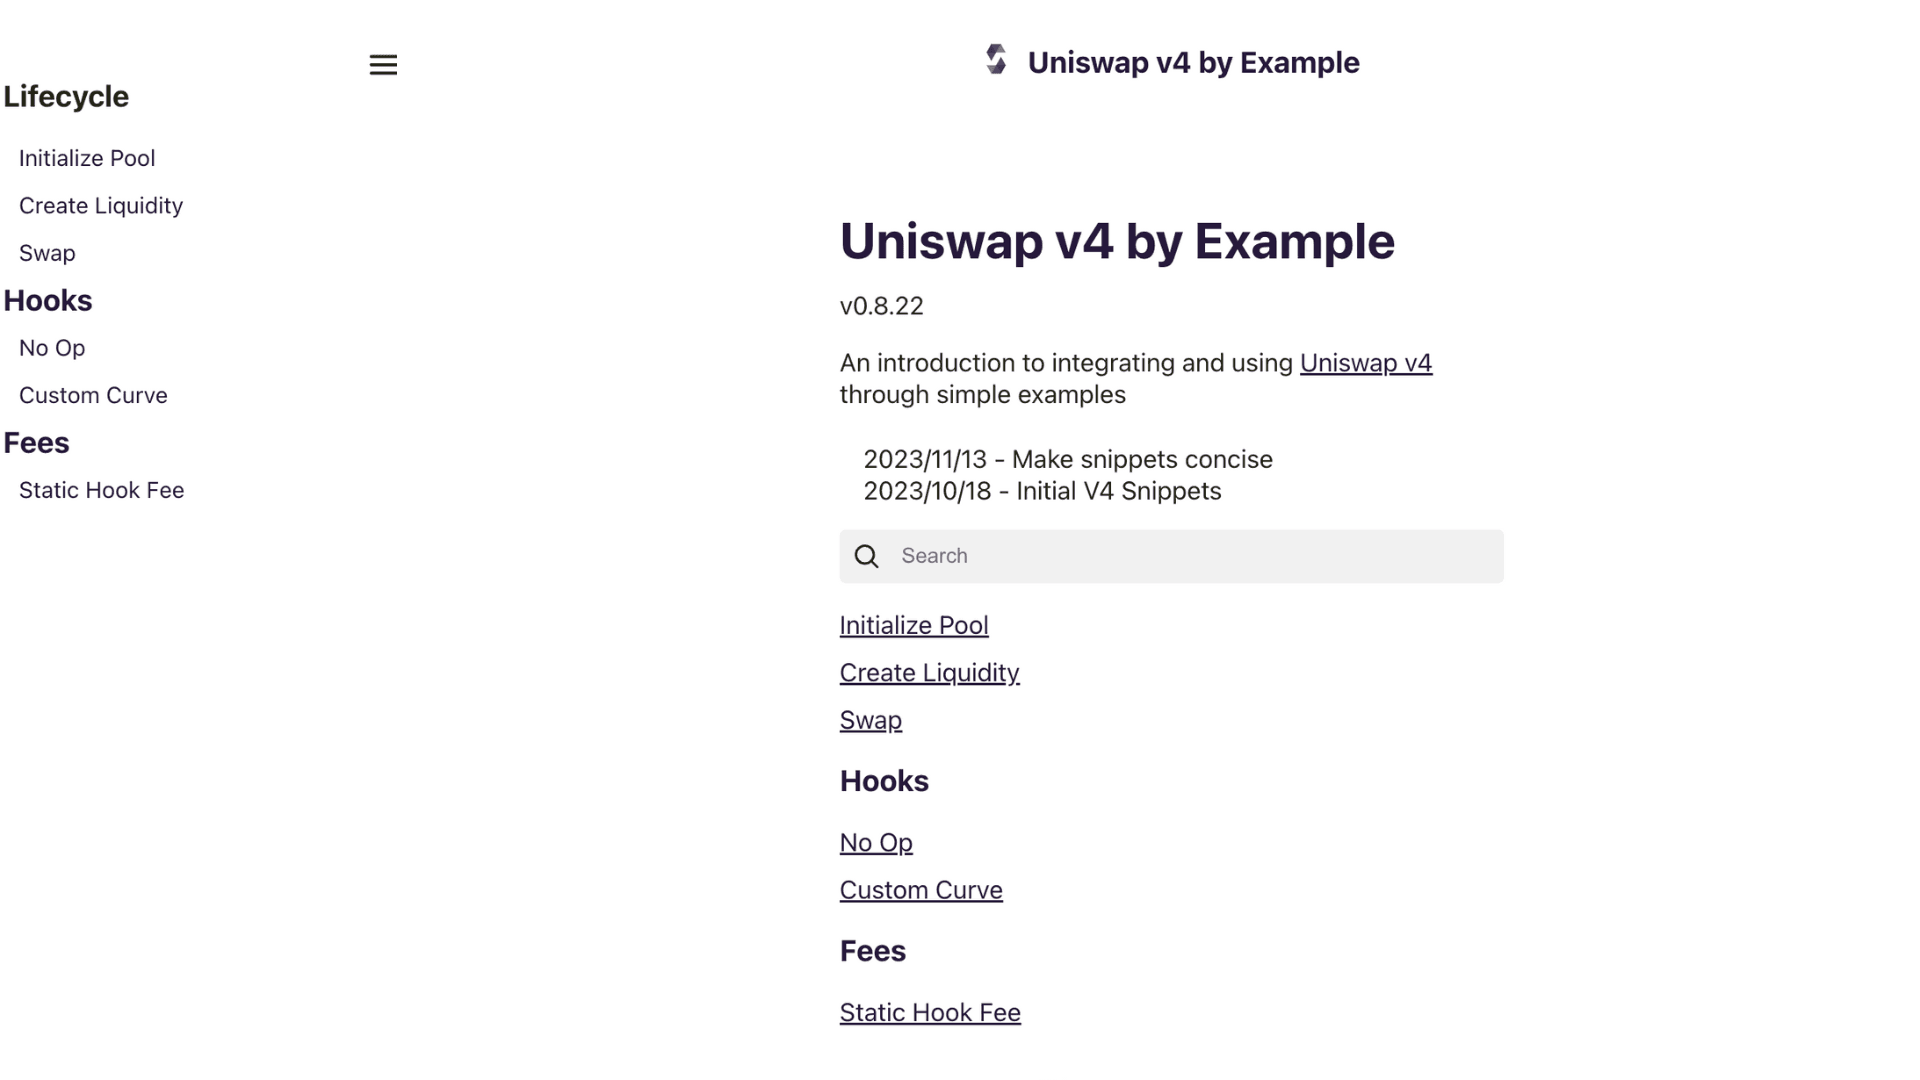 Uniswap V4 by example